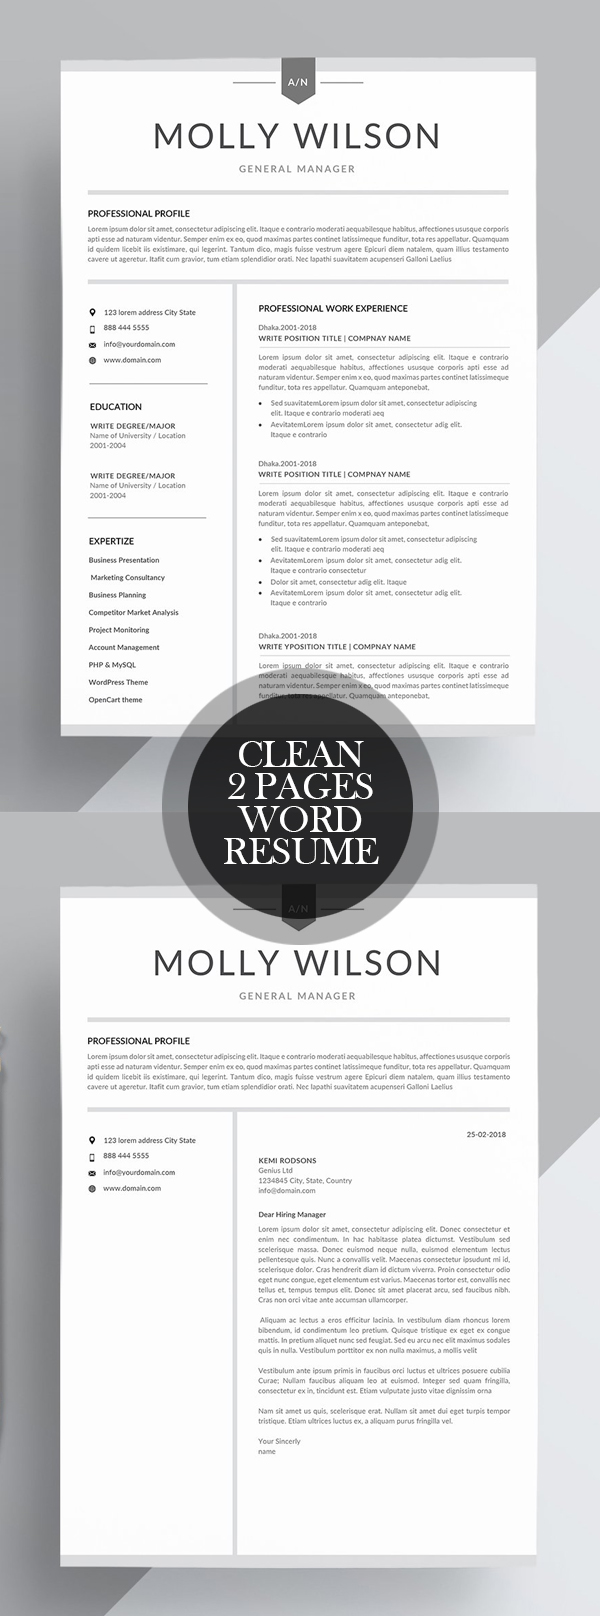 Clean 2 Page Word Resume Template #resumedesign